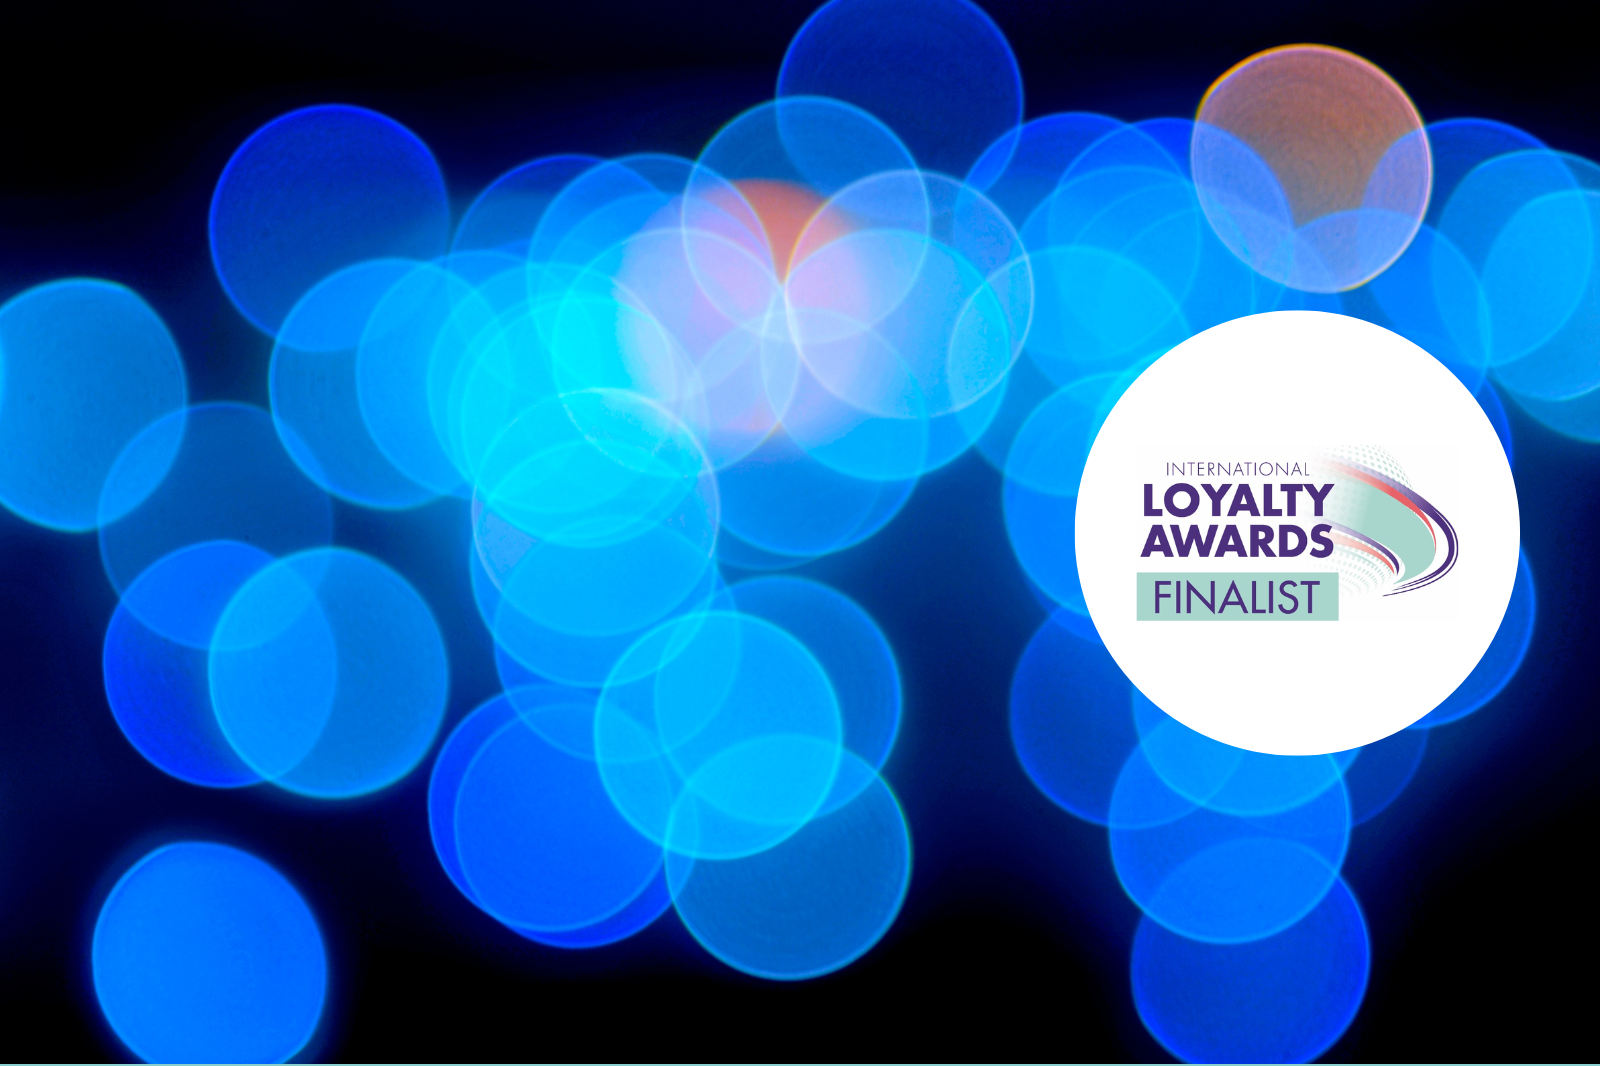 The Triple International Loyalty Awards 2022 finalists logo on a black background.